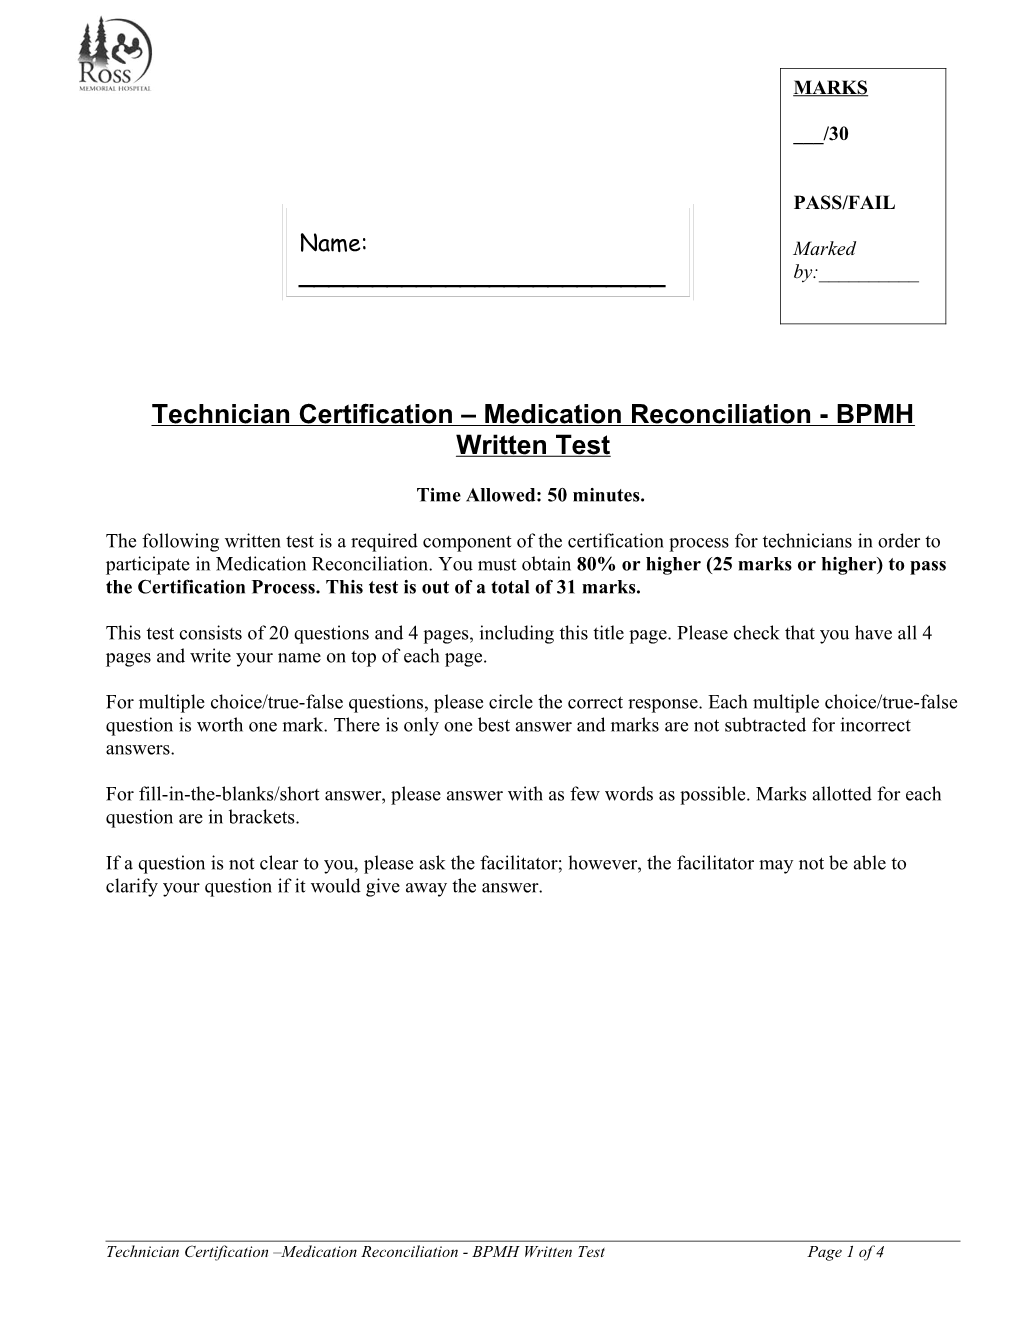 Pharmacy Technician Certification Written Test - Ross Memorial Hospital